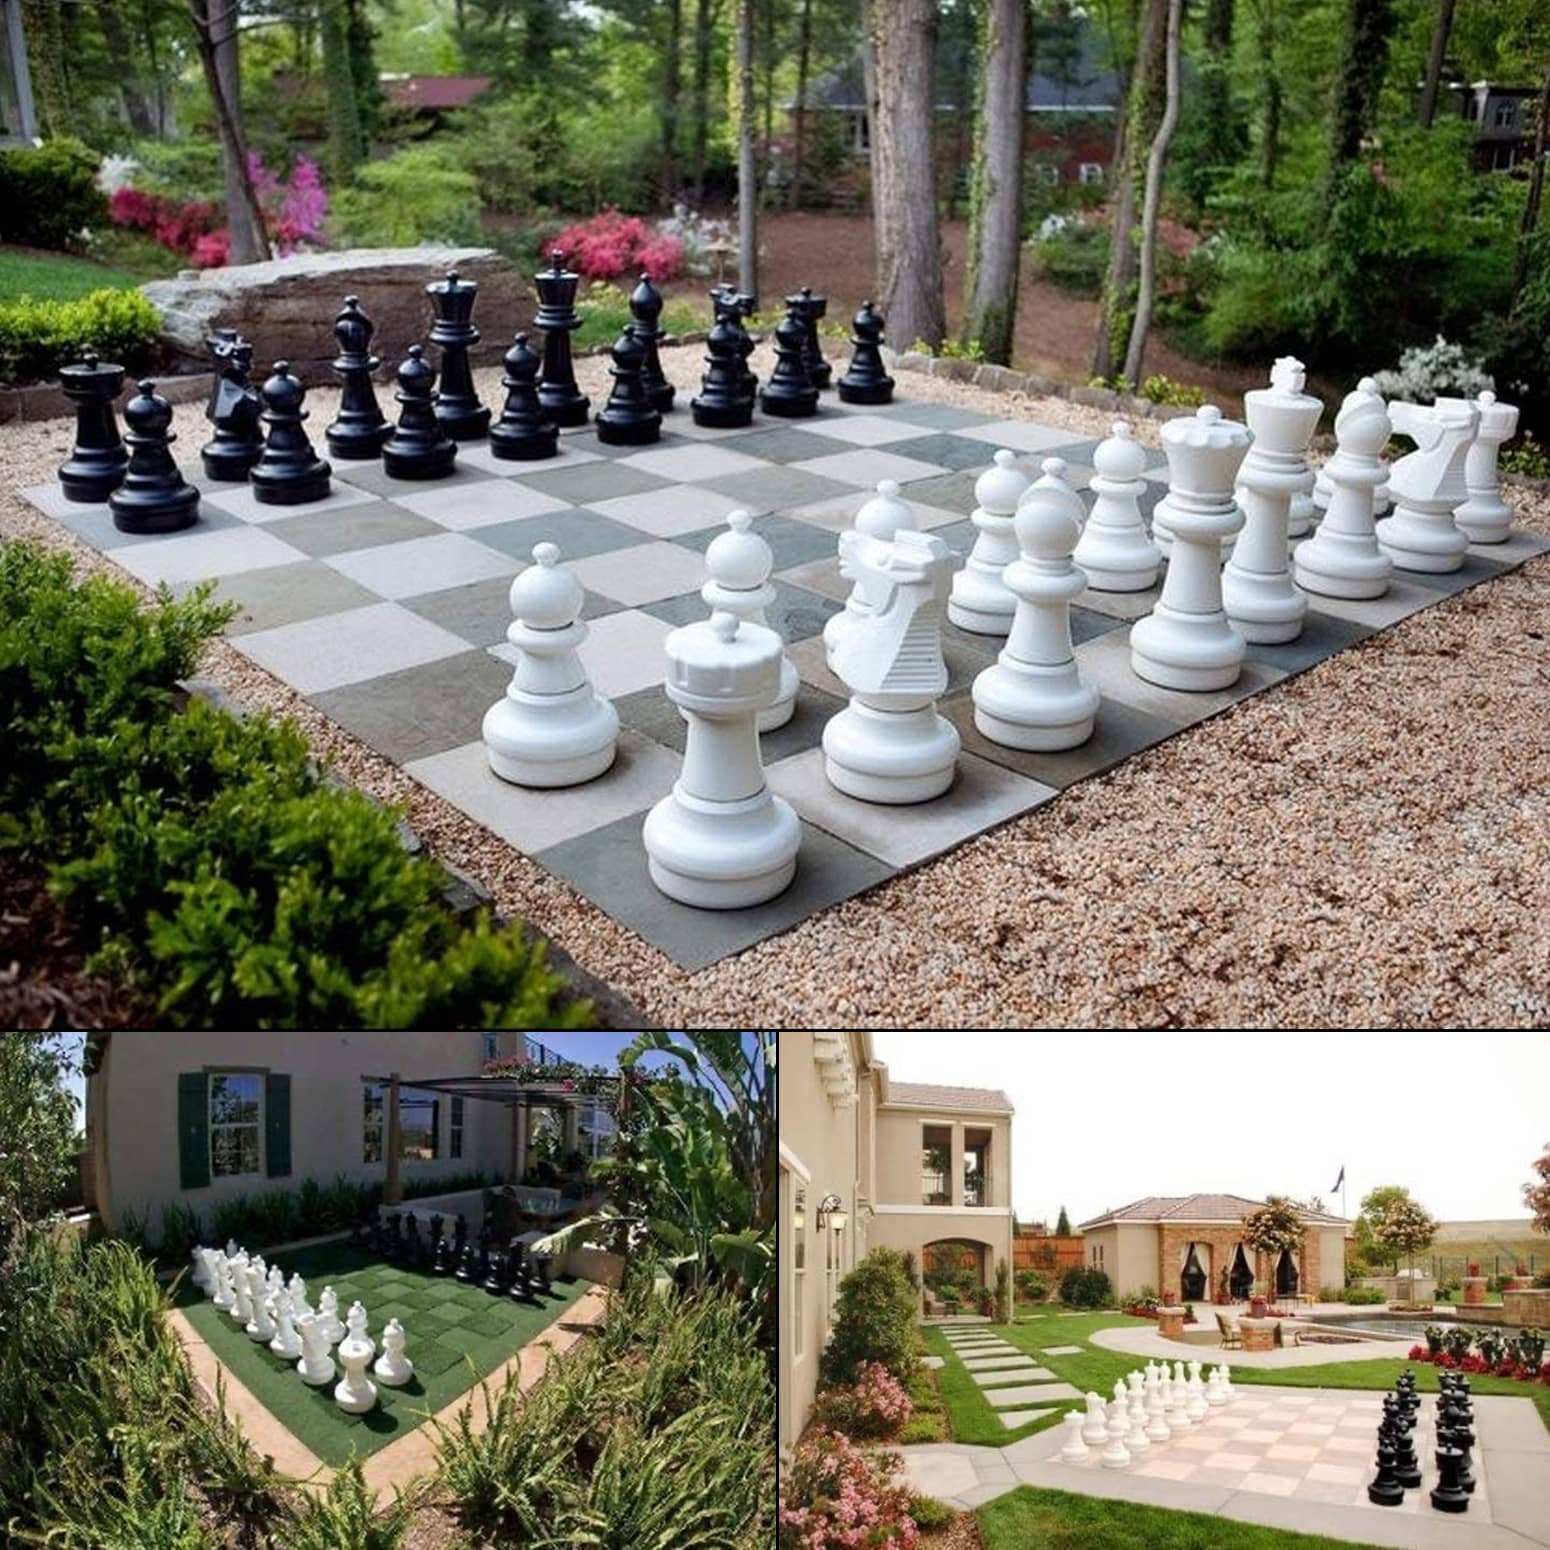 MegaChess Gigantic Outdoor Chess Set